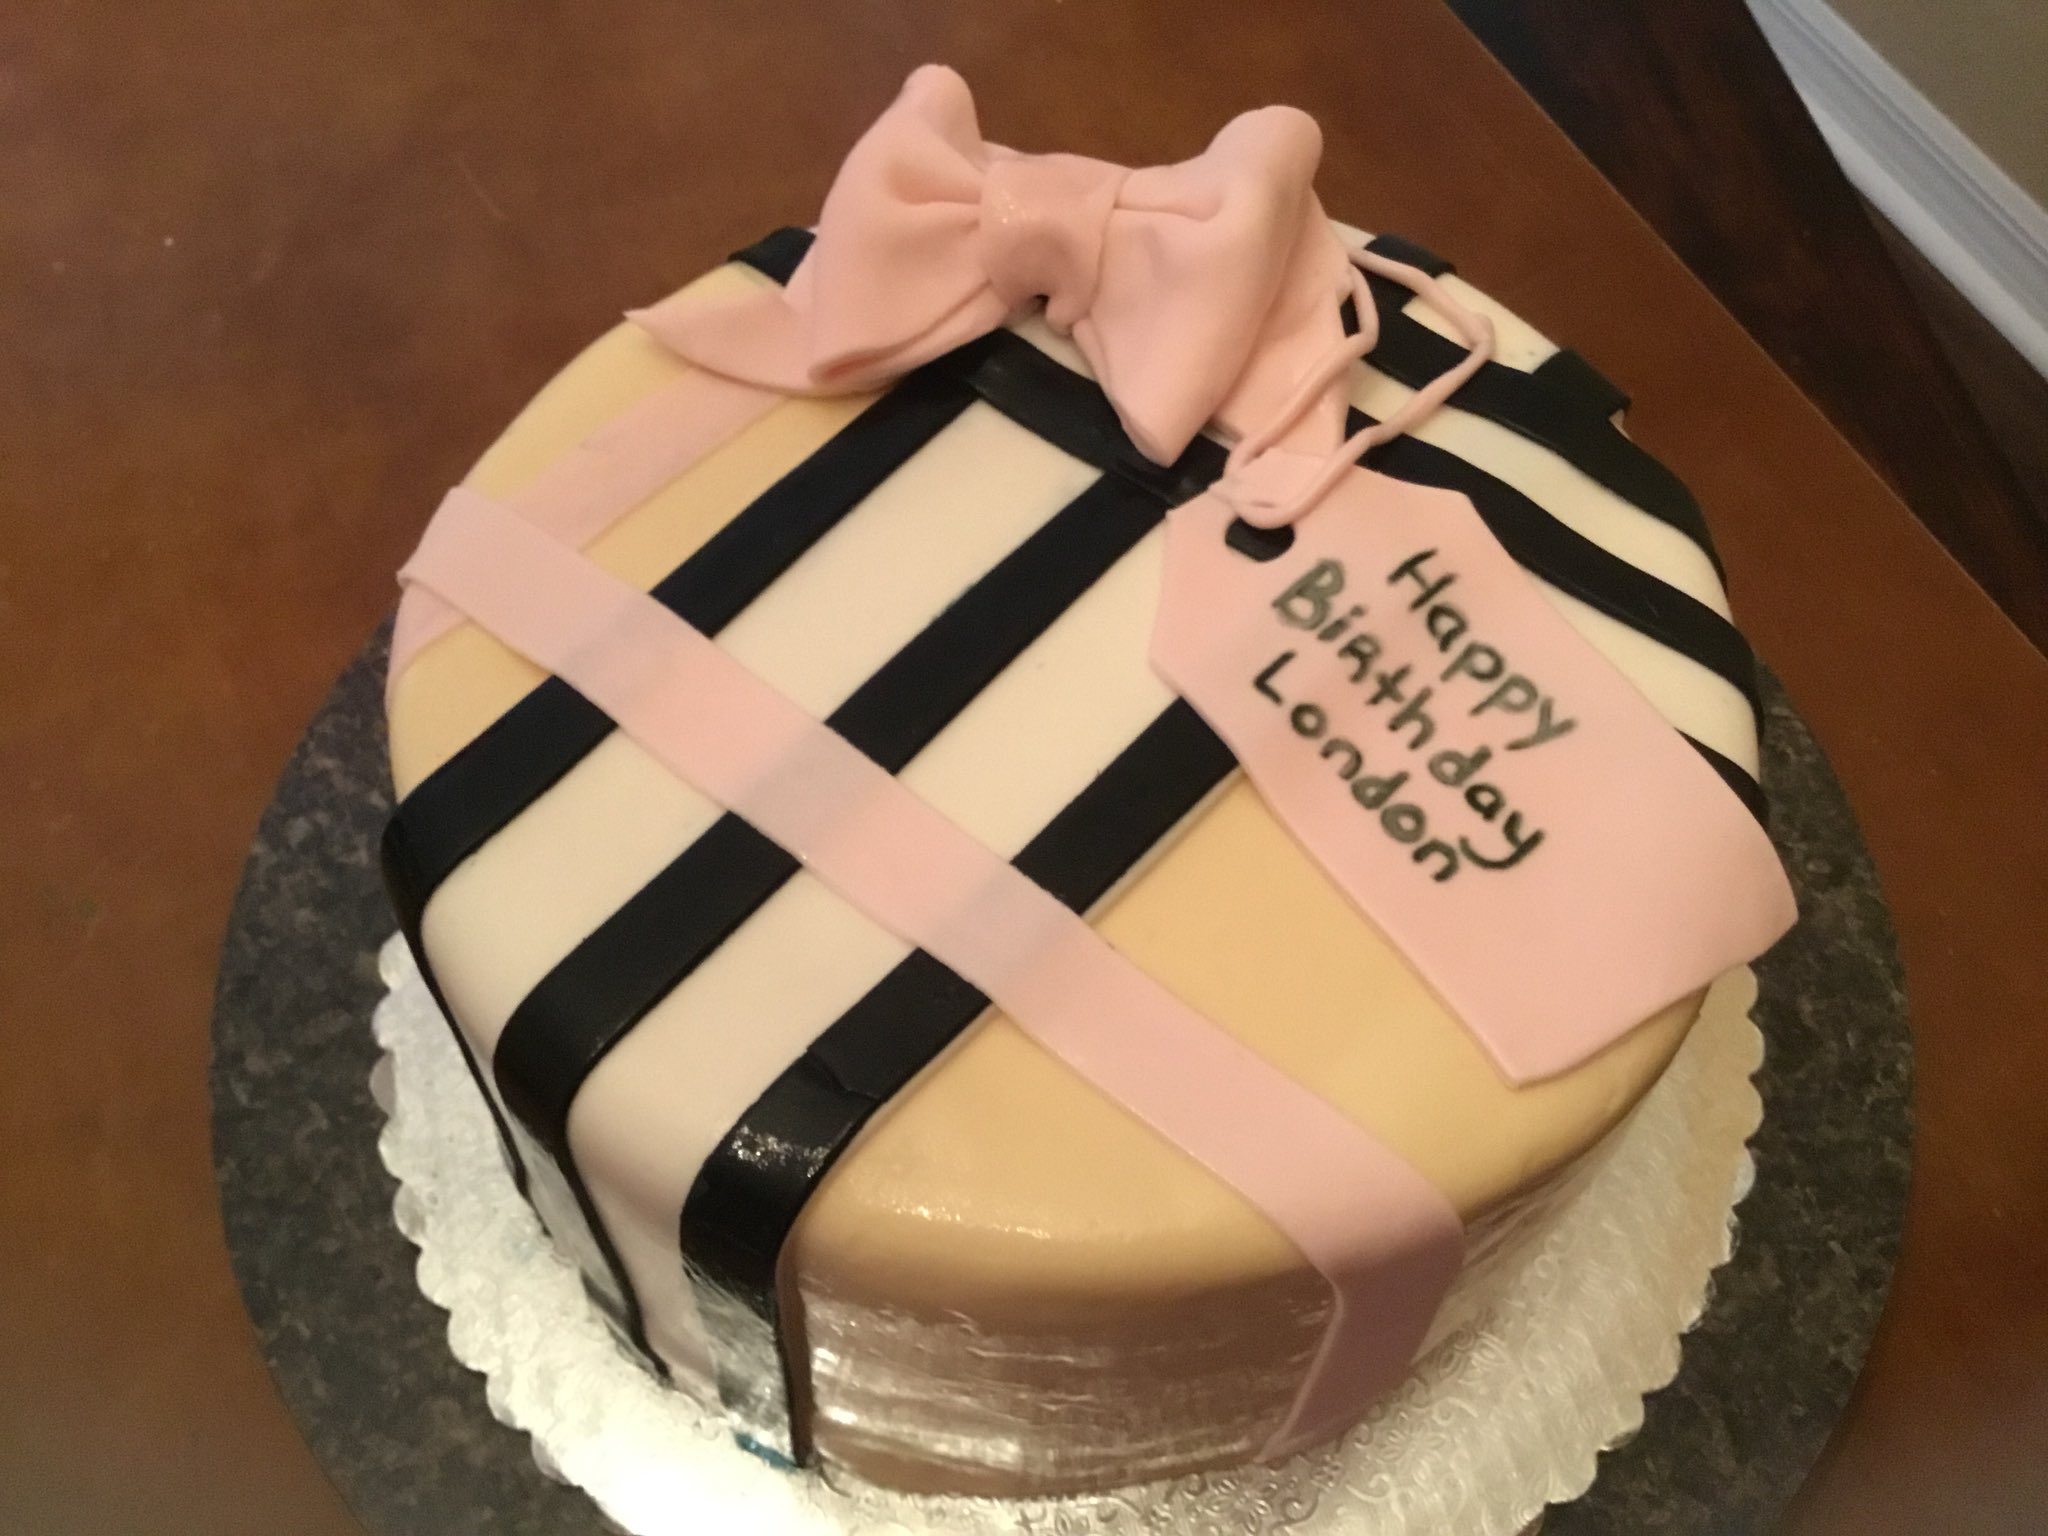 wanda mercado on Twitter: "Channeling #Designer #handbag #burburry for this  #lucky little #lady's #birthdaycake. #bougie #cake https://t.co/HGeLWM54un"  / Twitter